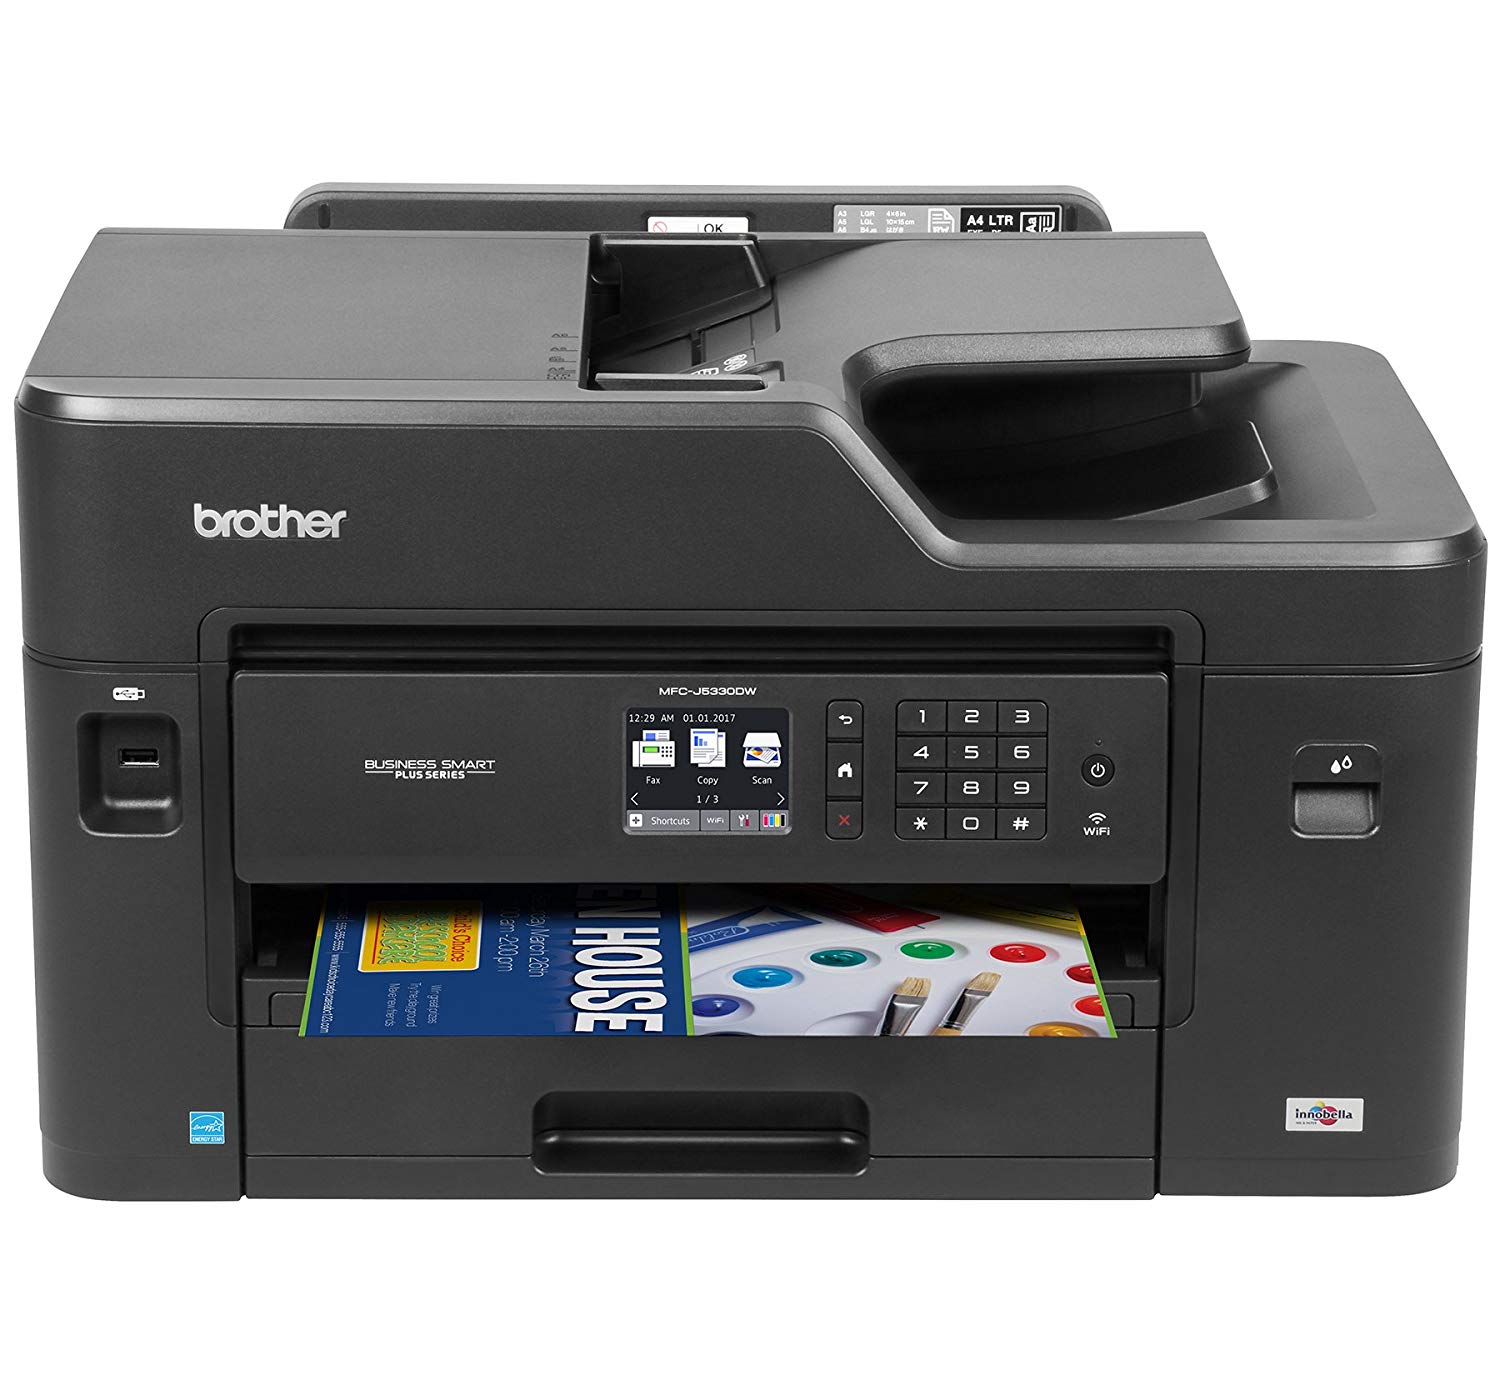 Brother Printer طابعة ألوان لاسلكية MFCJ5330DW مع ماسح ضوئي وآلة تصوير وفاكس